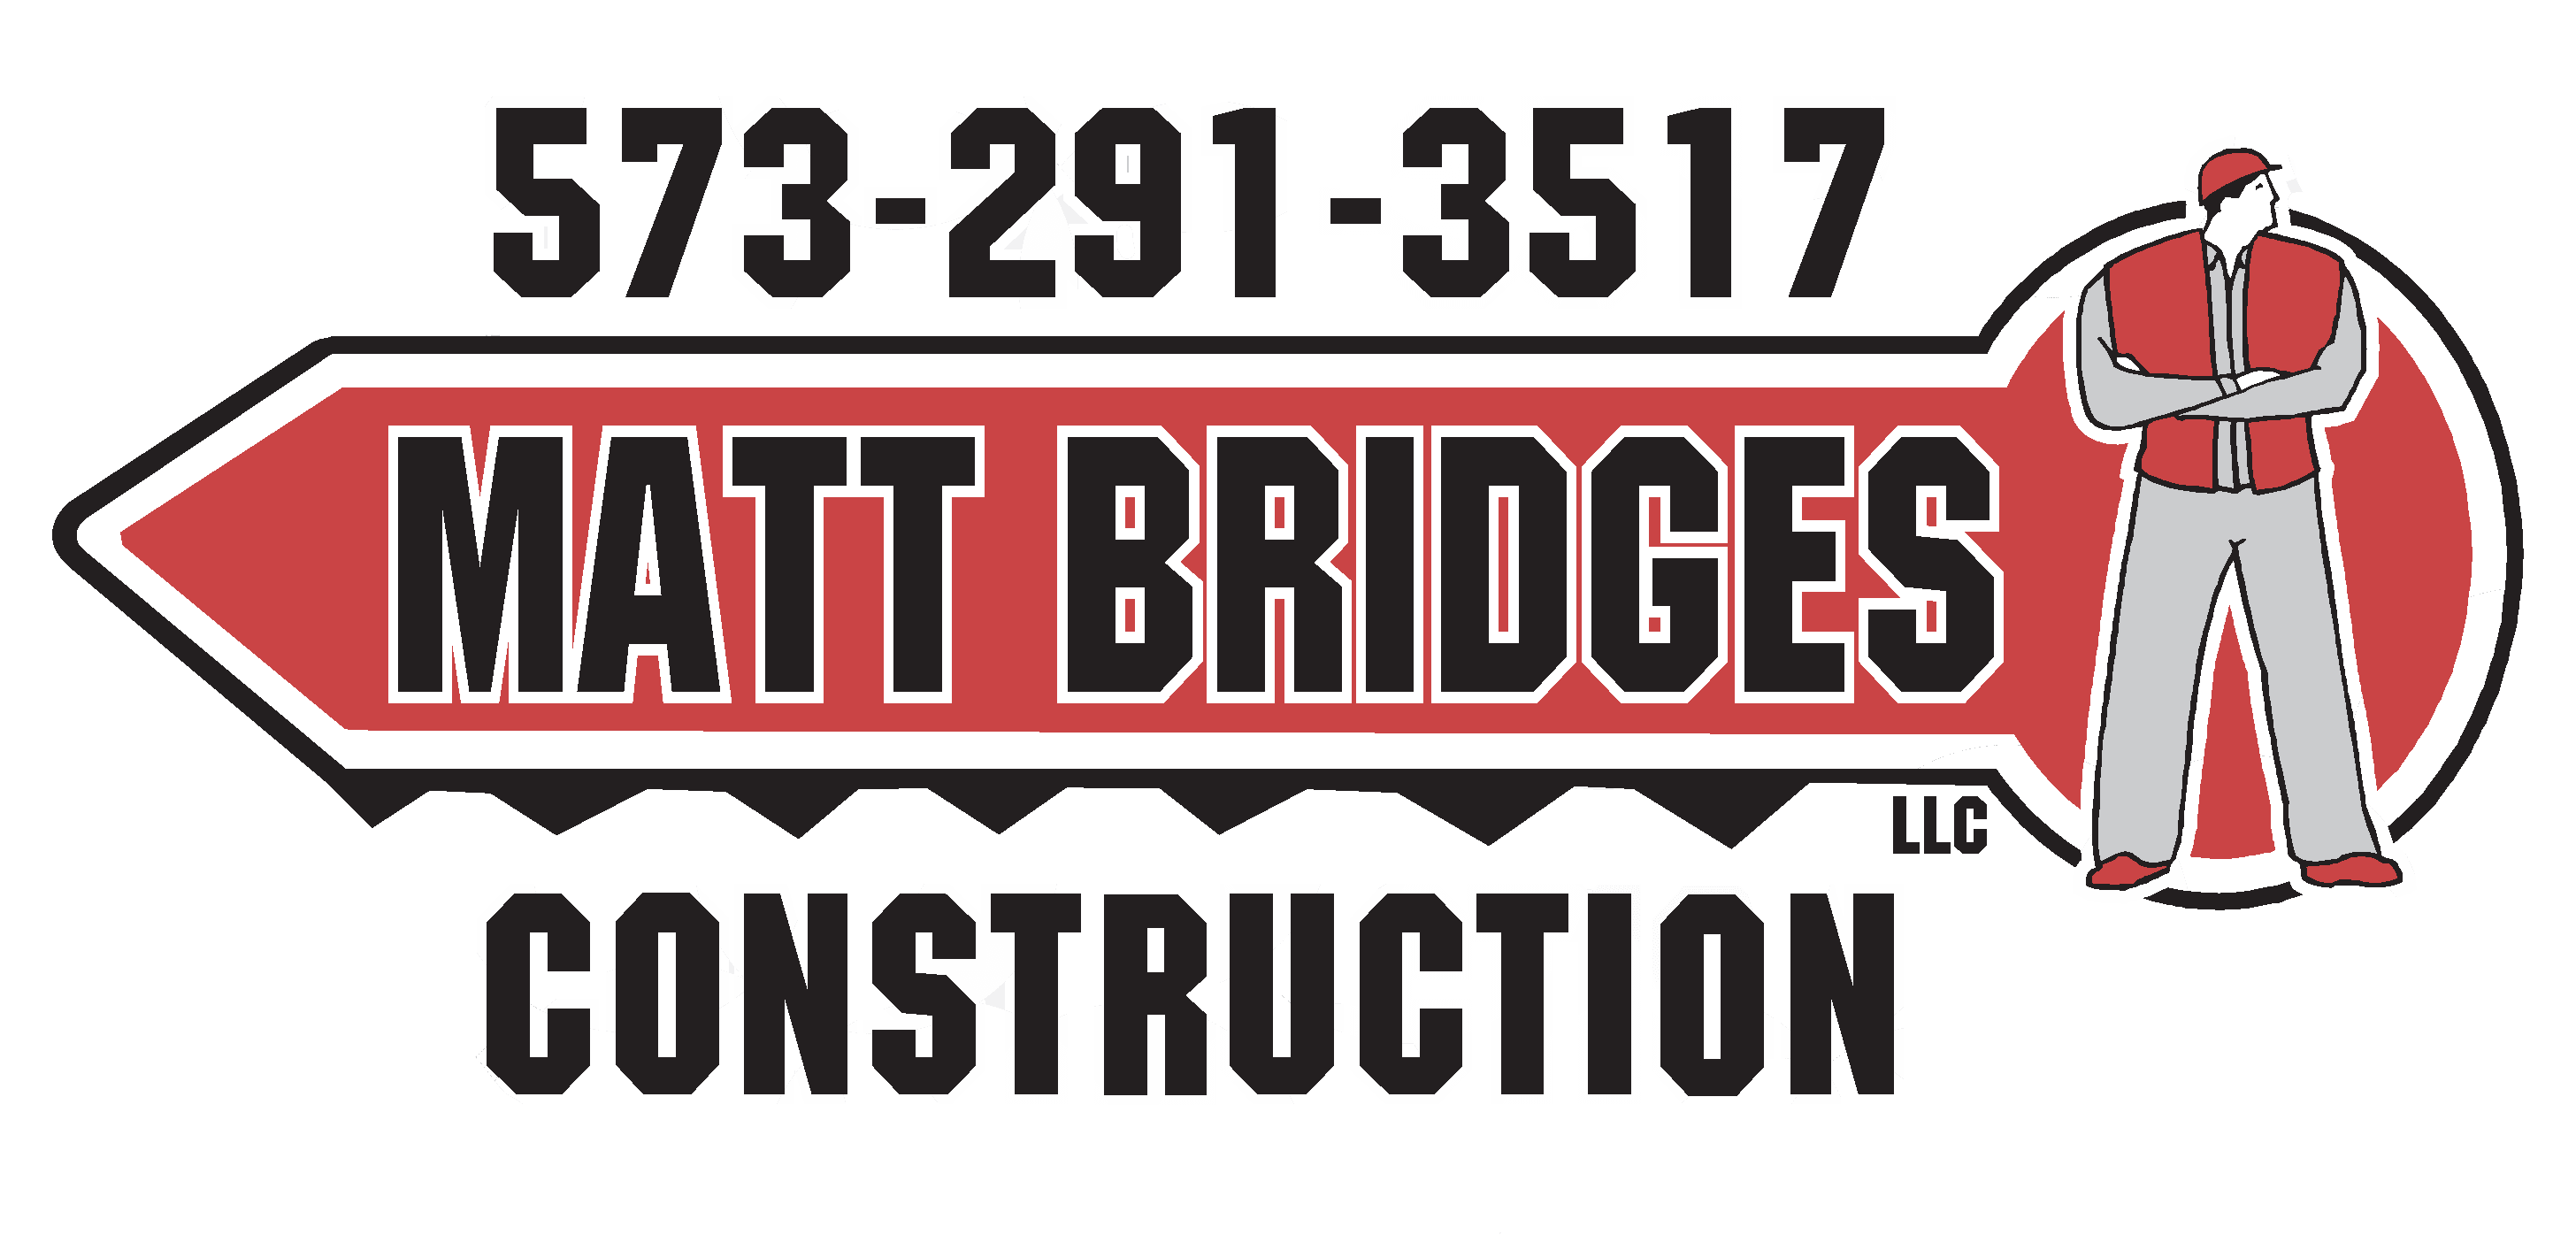 Call Matt Bridges Construction